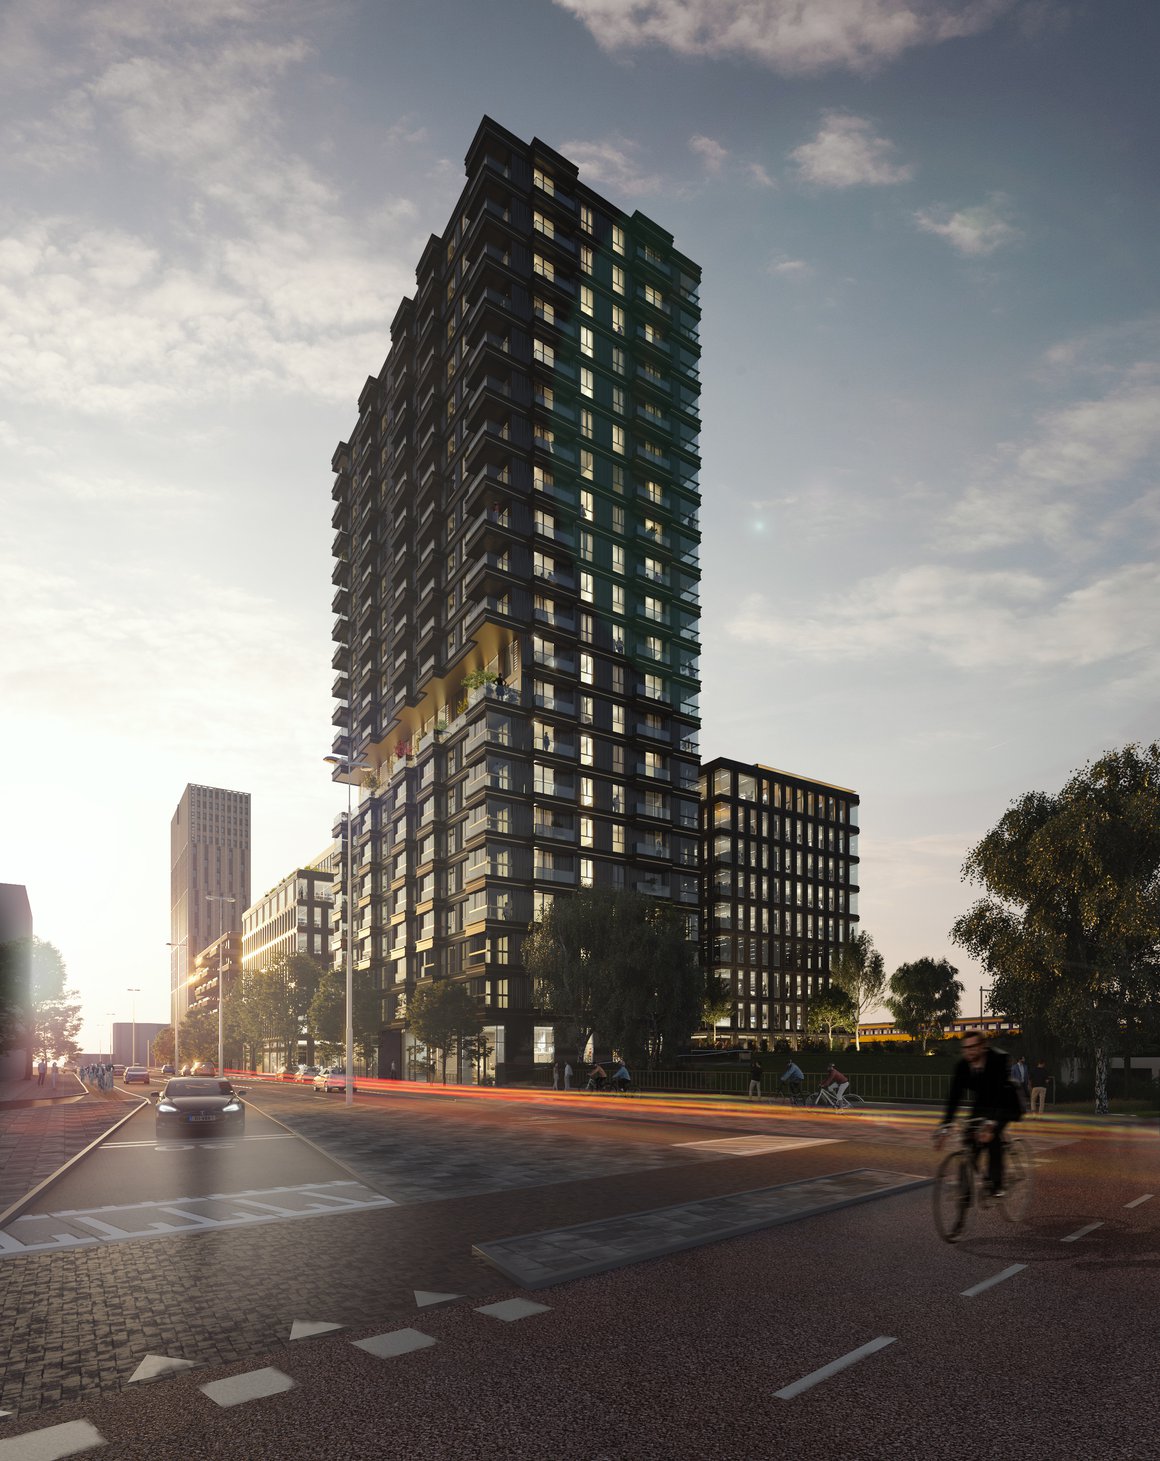 07_Architect-Offices-Residential-Public-EDGE-Eindhoven-MVSA©MVSA.jpg